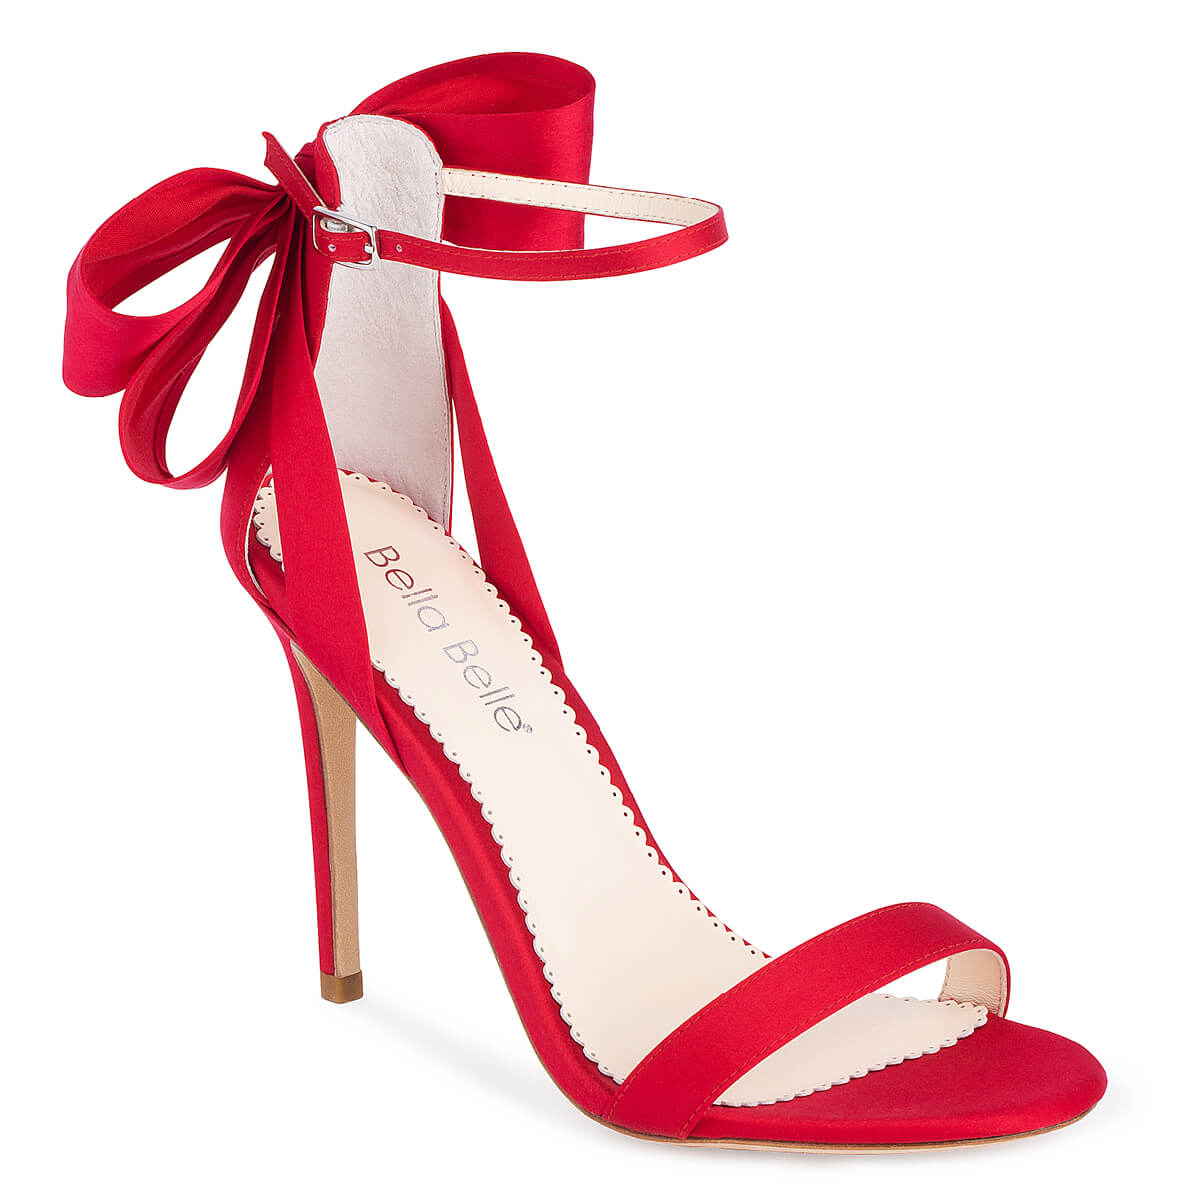 4 inch Heels Hot Pink Sandals Stiletto Heels Ankle Strap Sandals|FSJshoes